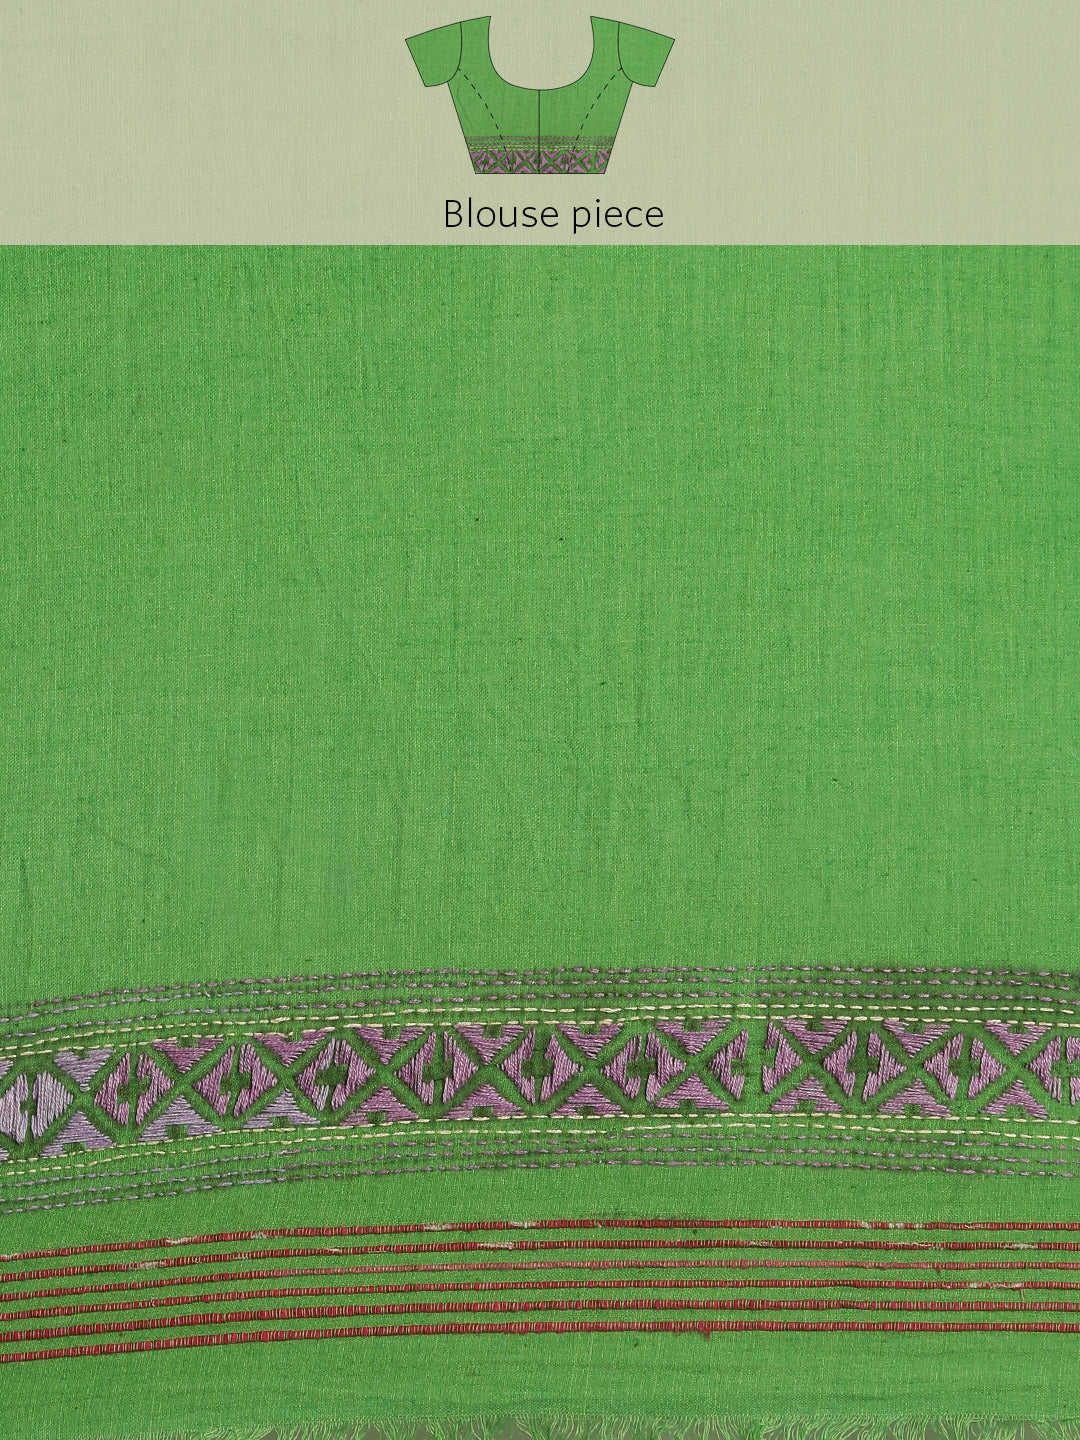 Parrot Green Handcrafted Khesh Kantha Stitch Cotton Sari